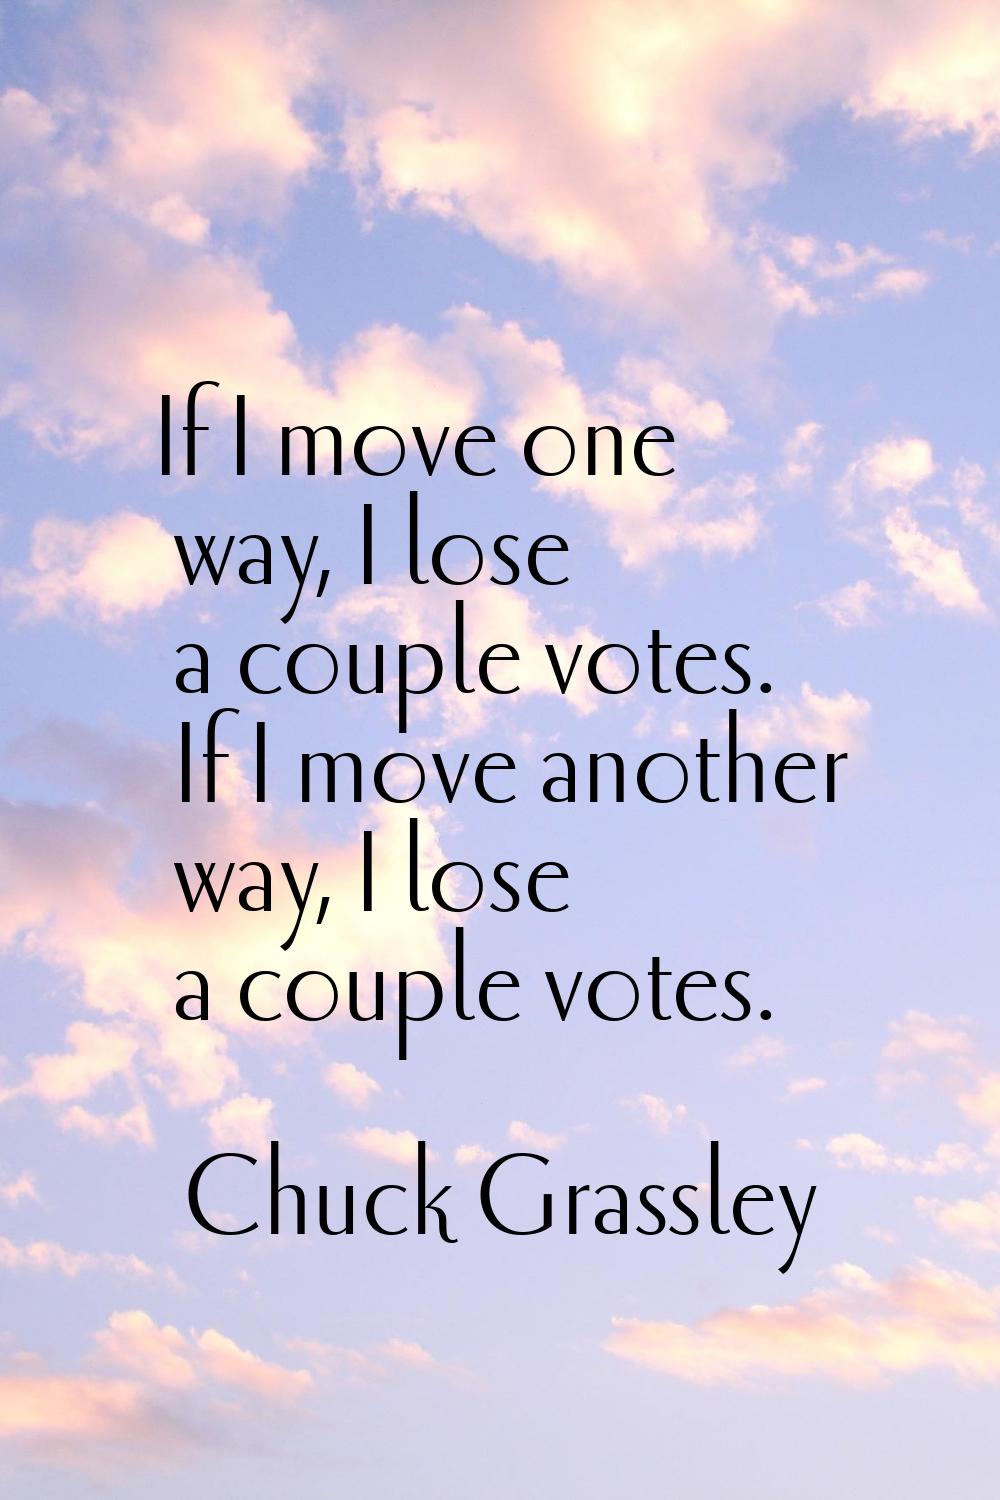 If I move one way, I lose a couple votes. If I move another way, I lose a couple votes.